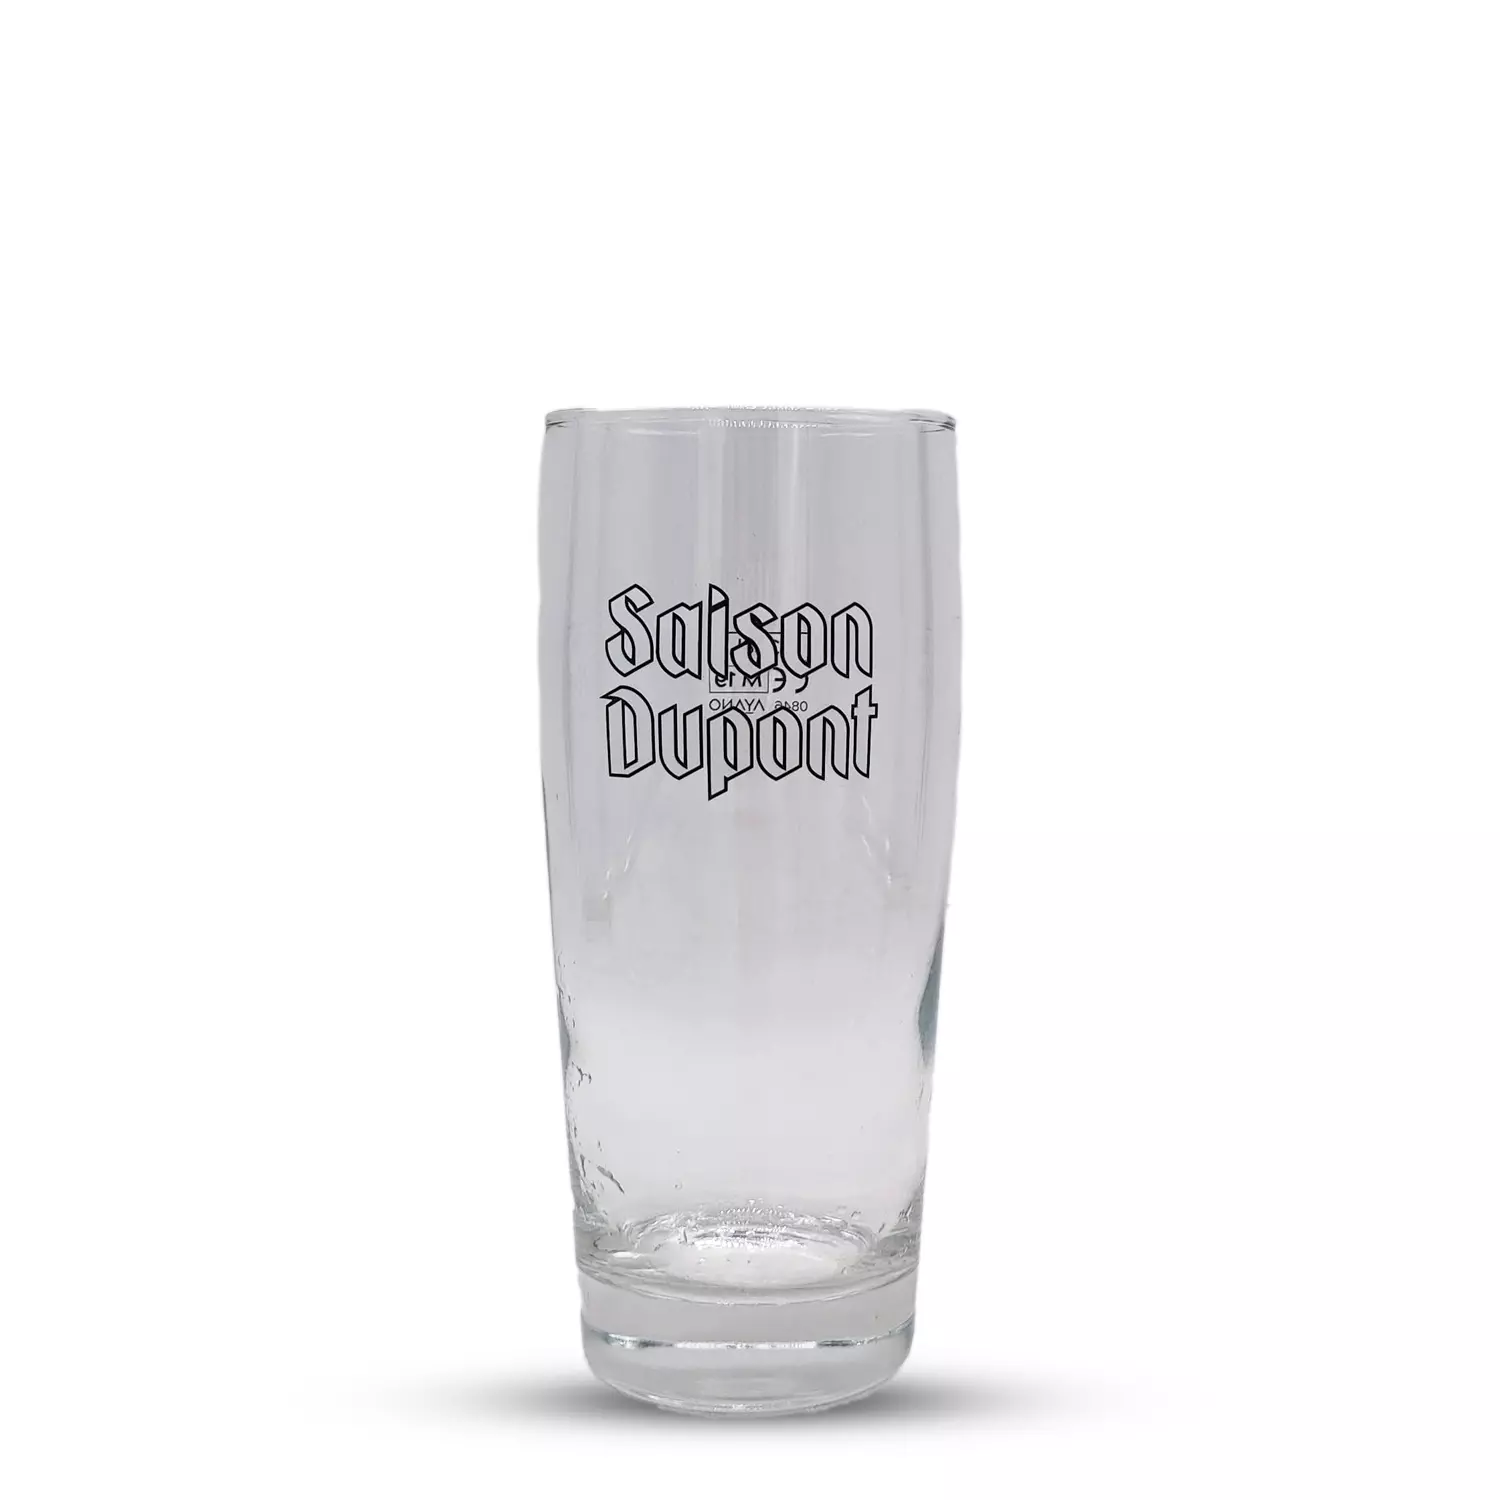 Saison Dupont Glass - 0,33L